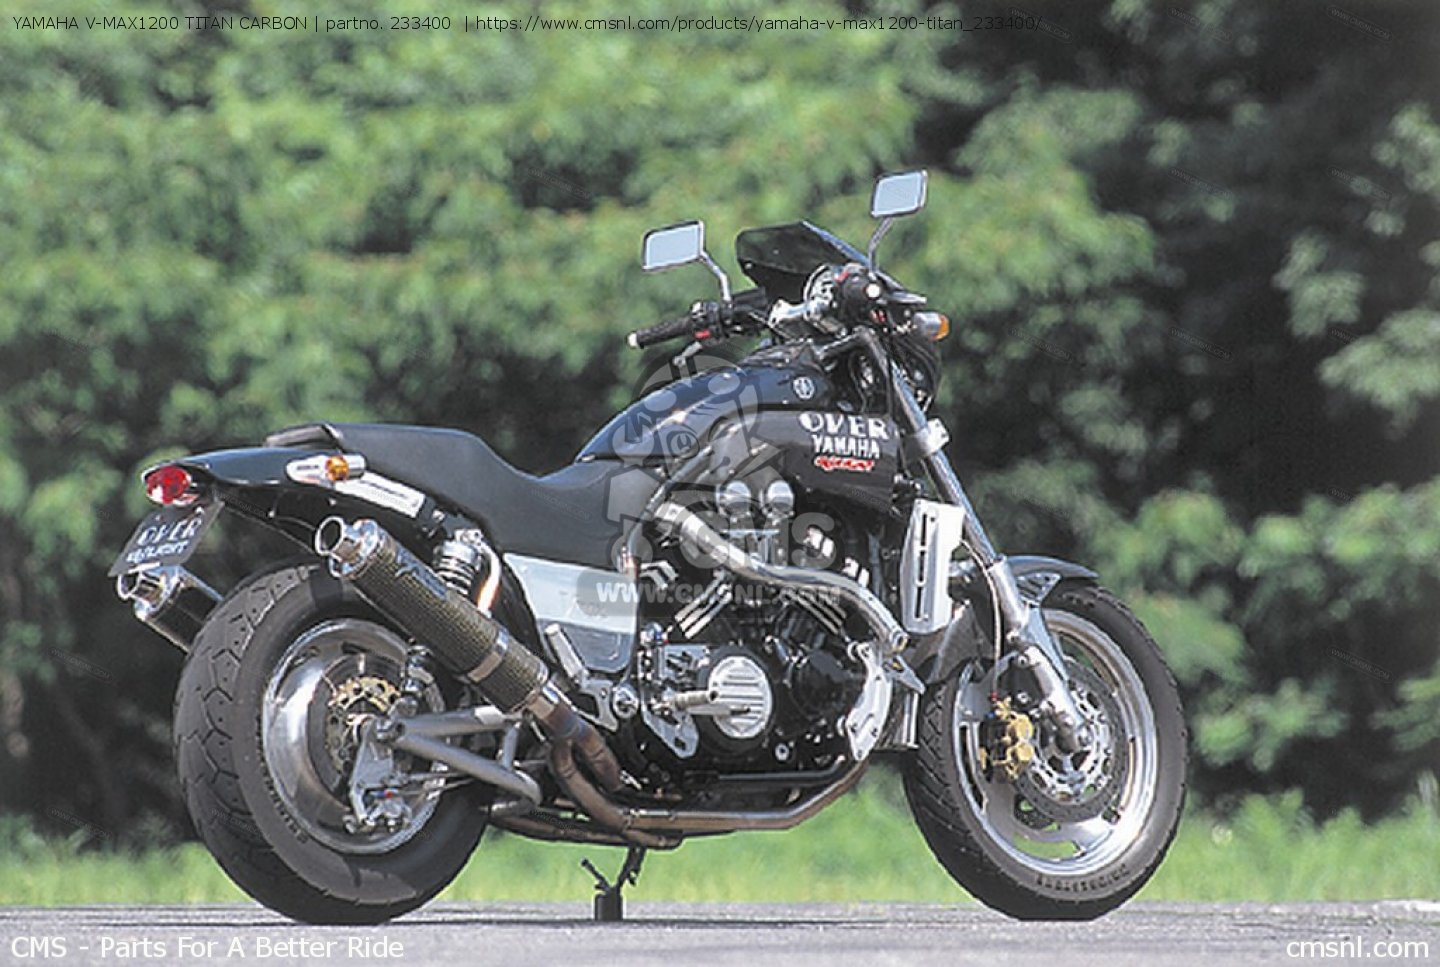 233400: Yamaha V-max1200 Titan Carbon Over Racing - buy the 23-34-00 at